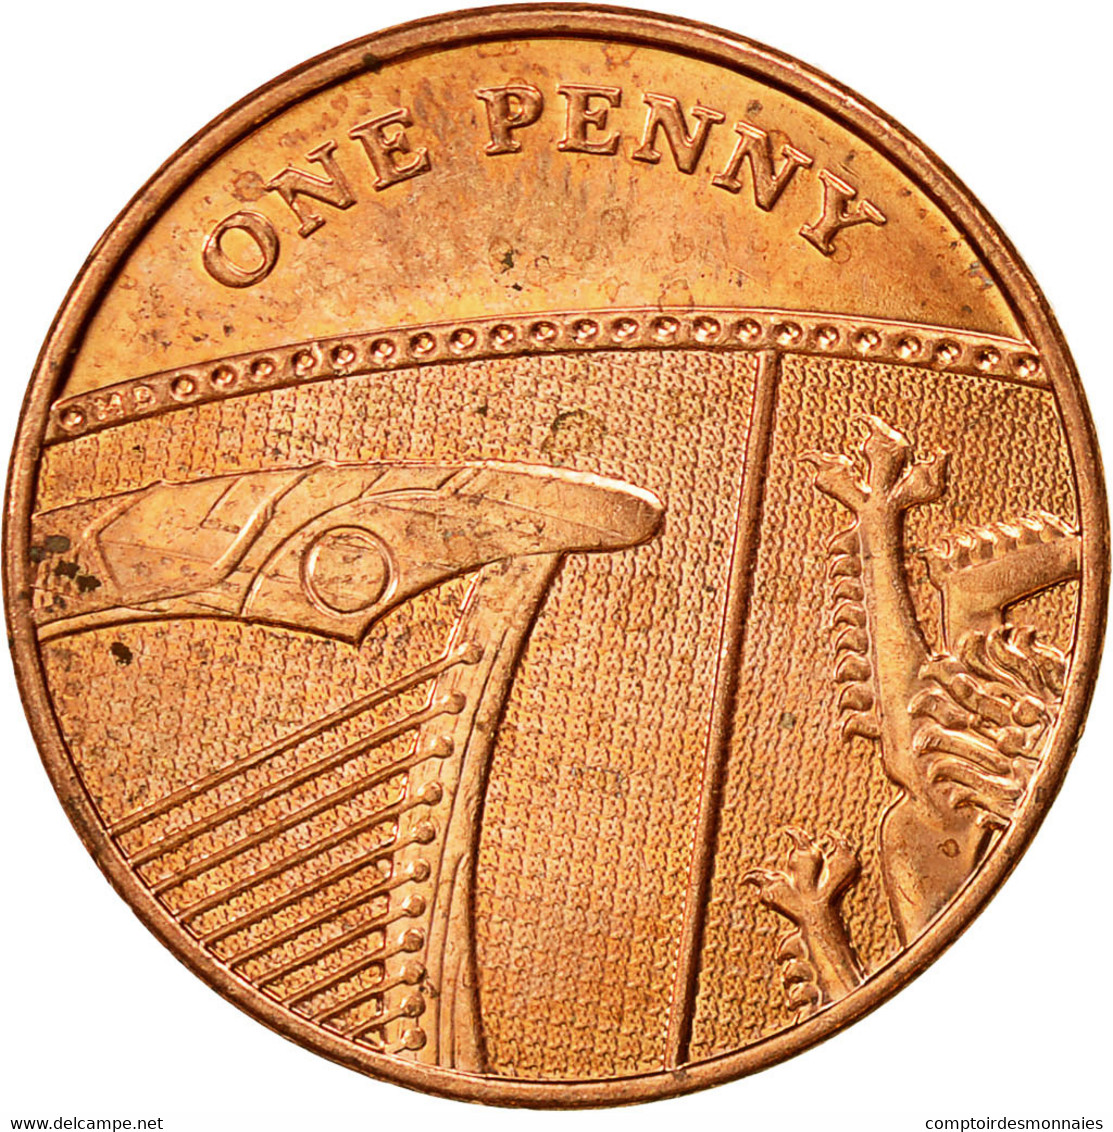 Monnaie, Grande-Bretagne, Elizabeth II, Penny, 2013, SUP, Copper Plated Steel - 1 Penny & 1 New Penny